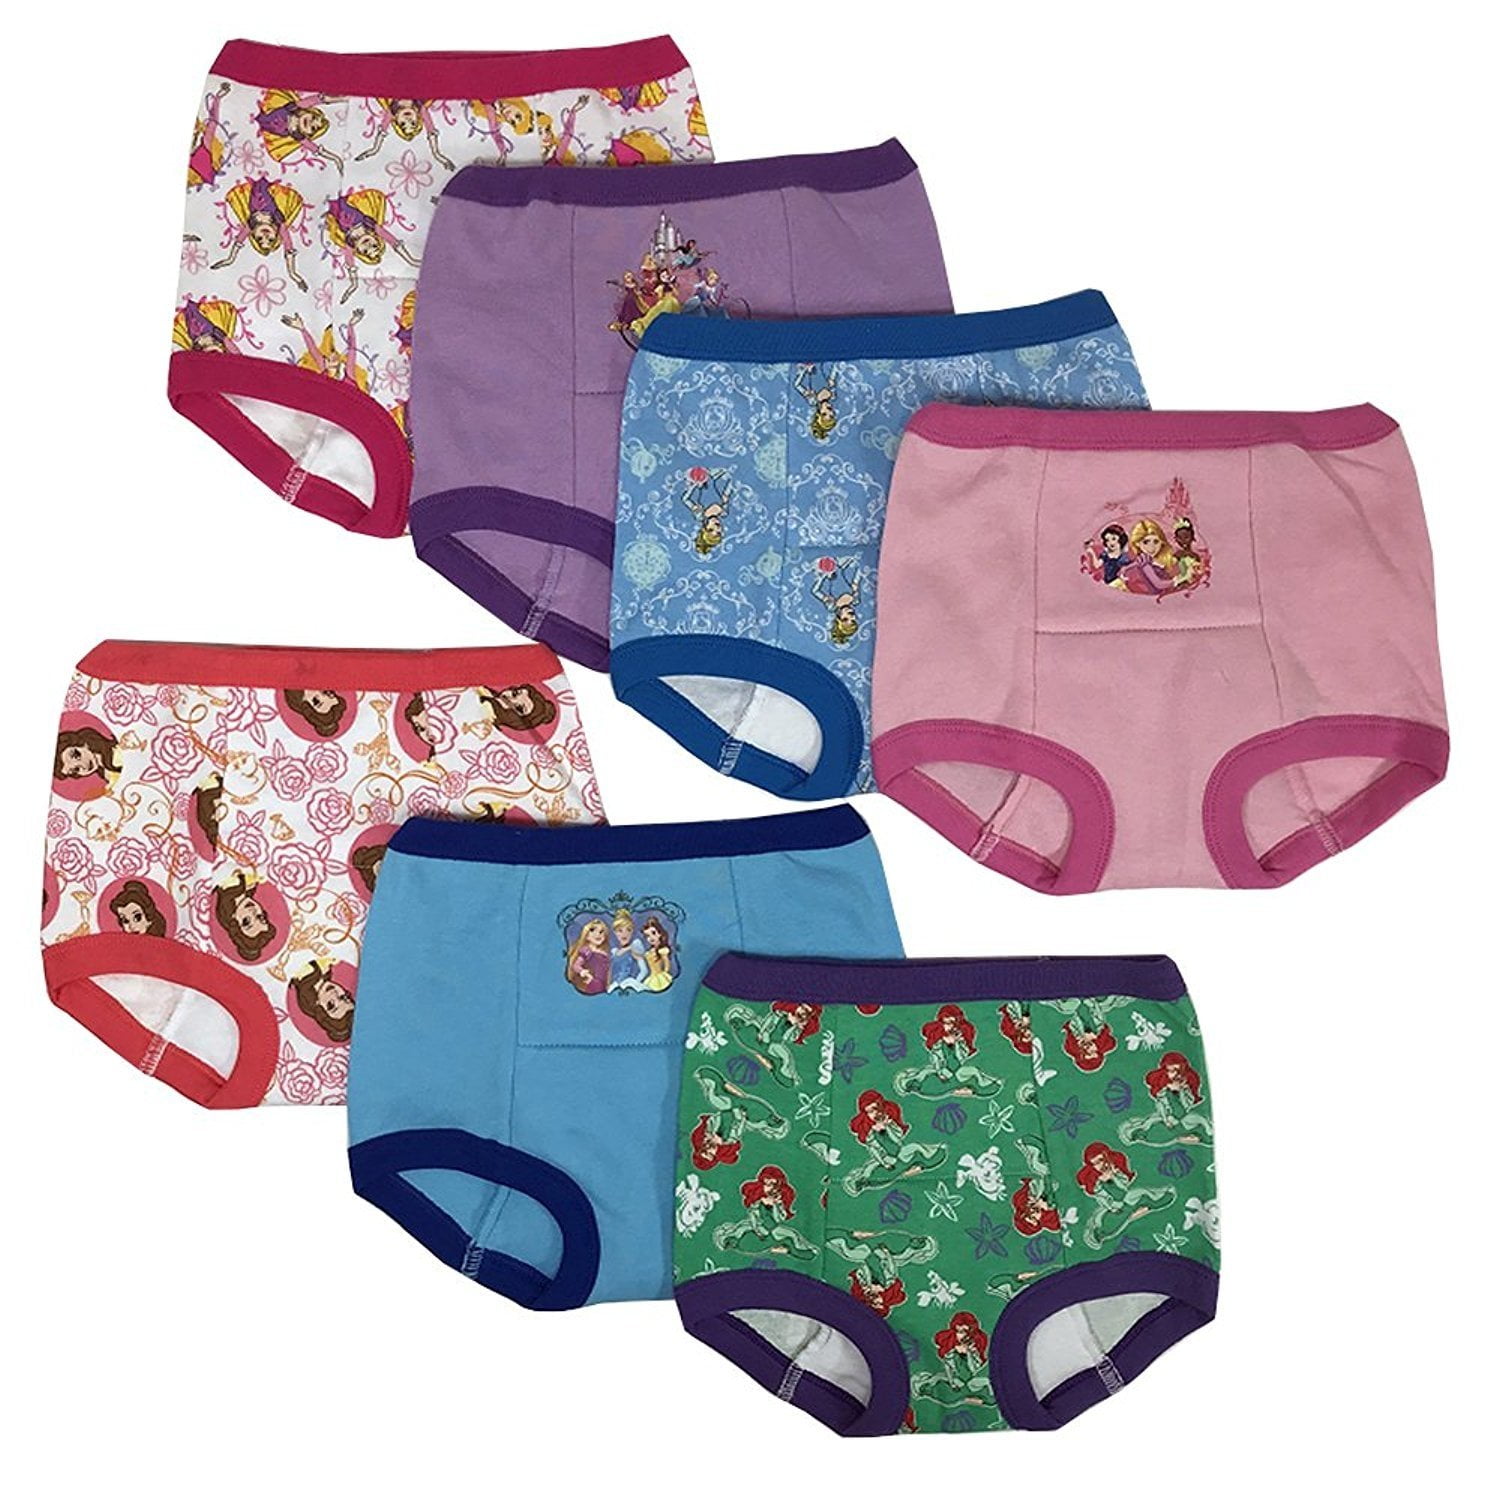 Disney Princess Girls Potty Training Pants Panties Underwear Toddler 7-Pack  Size 2T 3T 4T